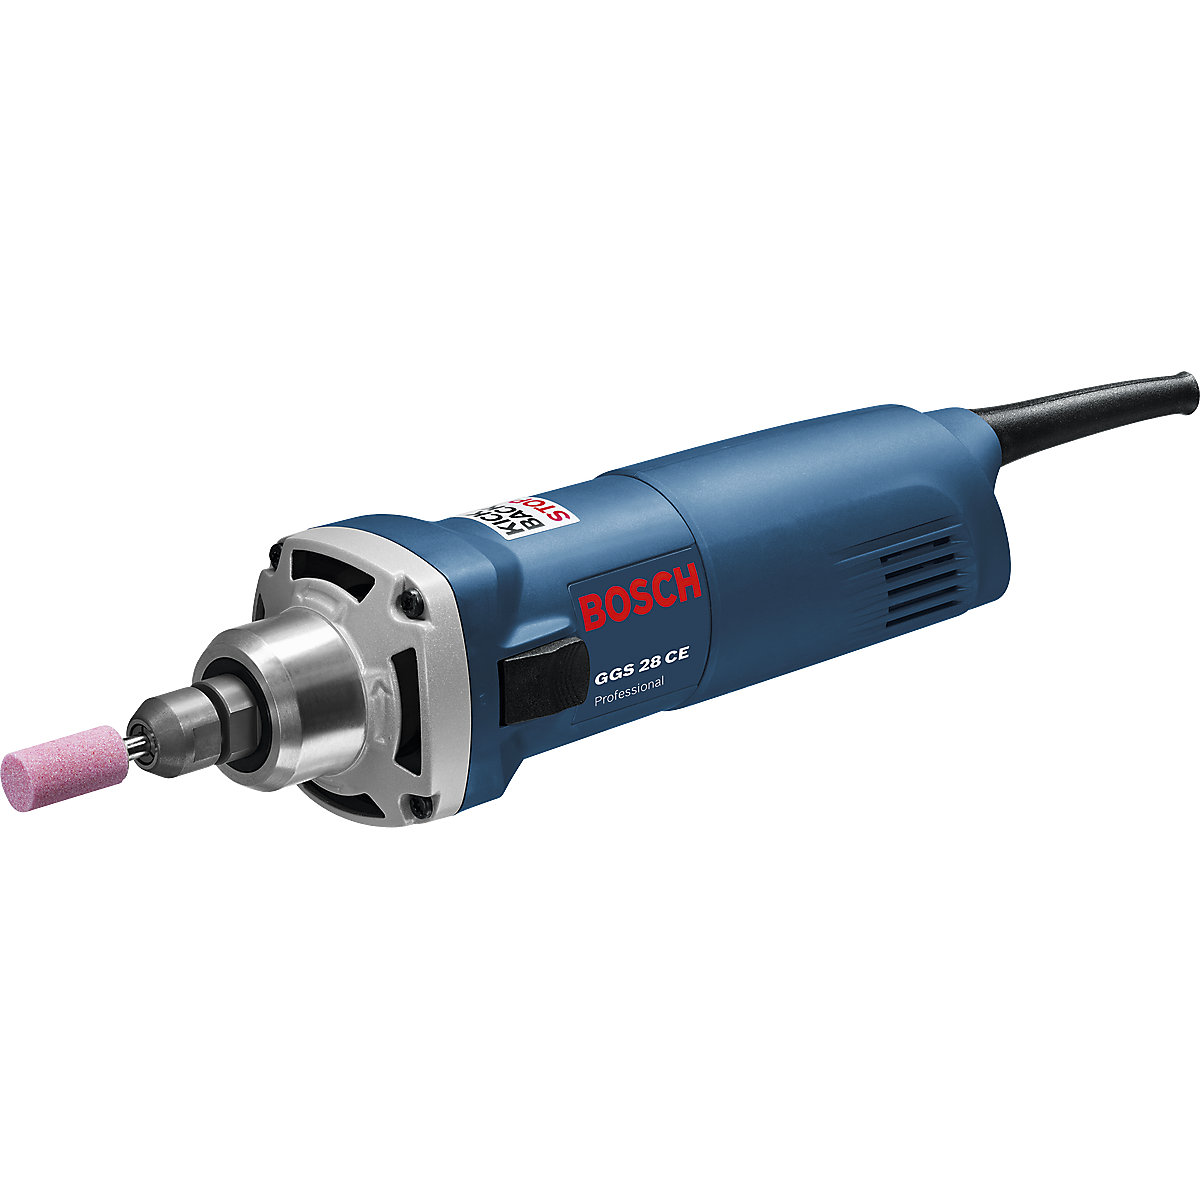 GGS 28 CE Professional straight grinder – Bosch